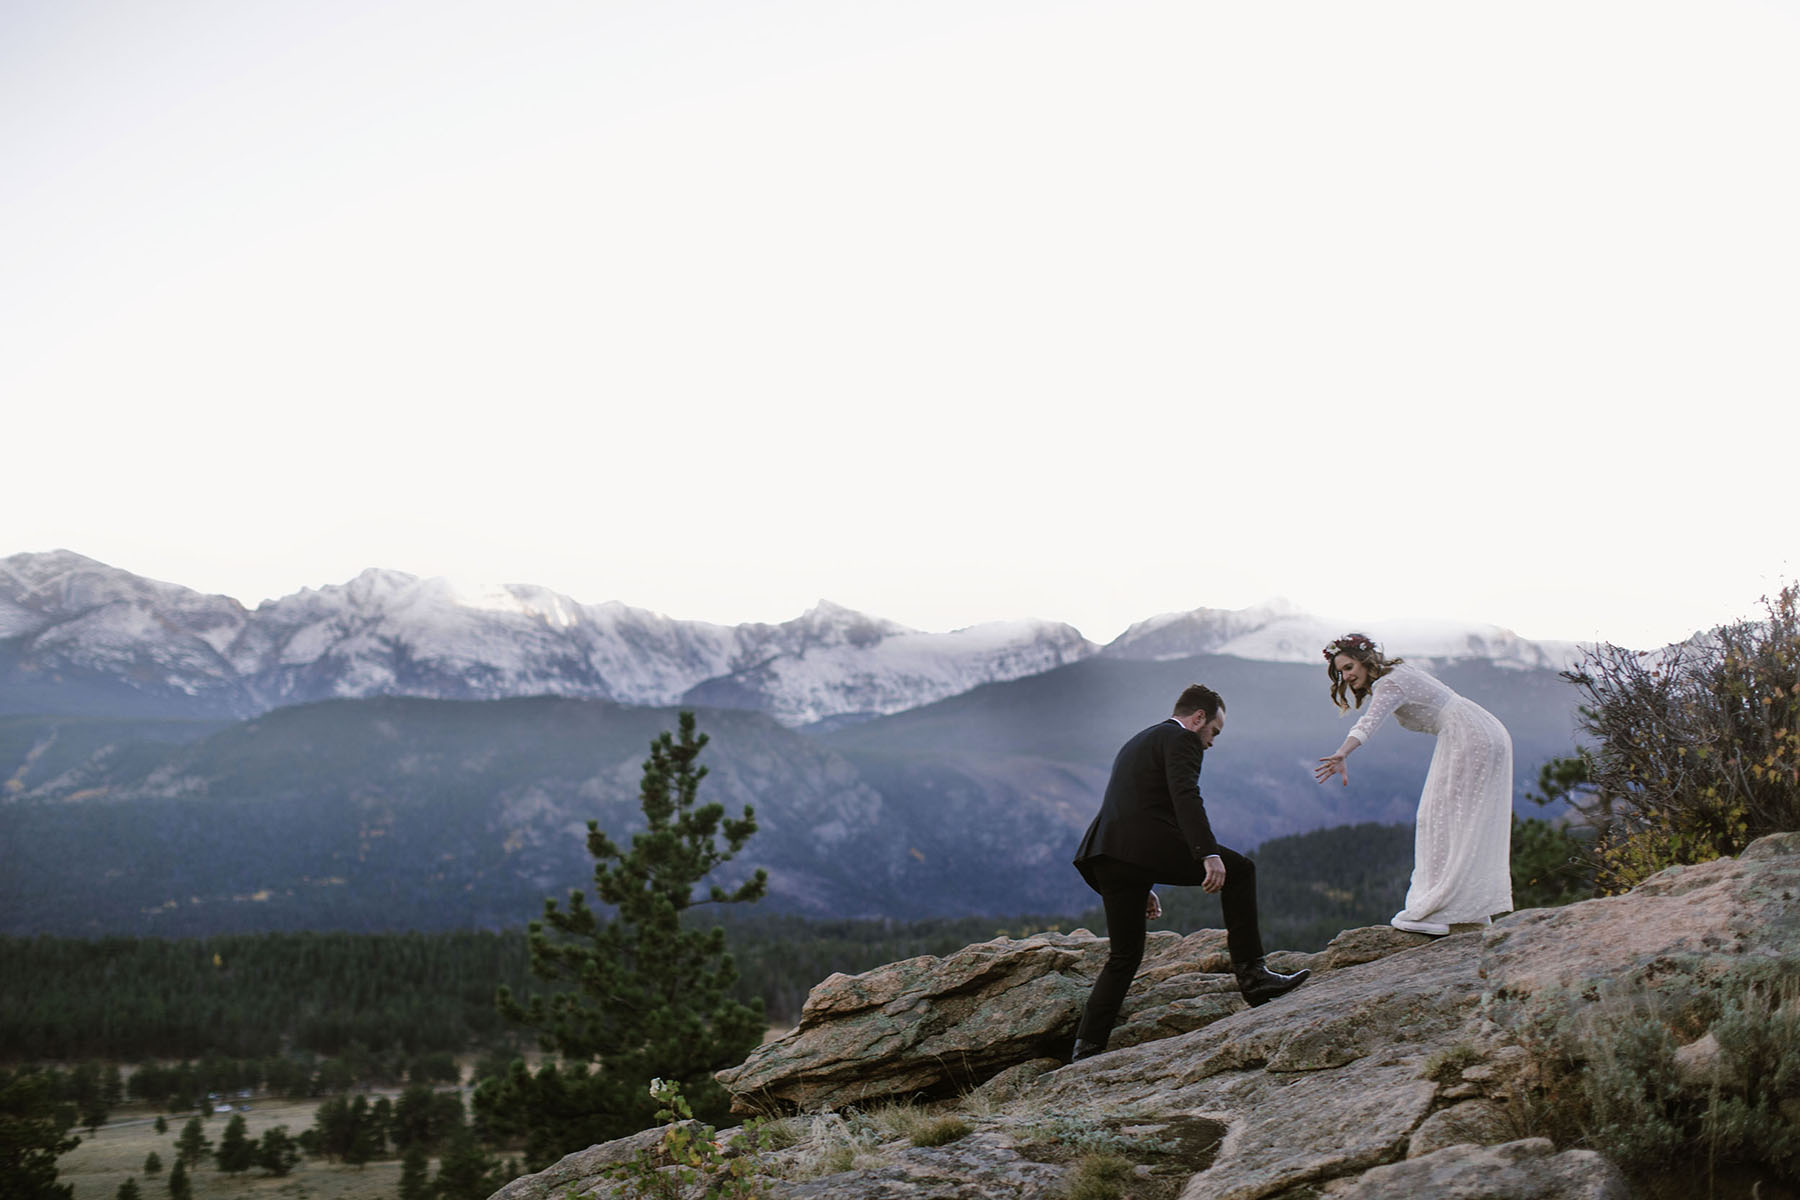 A bride reaches out to help a groom climb rocky terrain in a mountainous wilderness in a Sarah Gormley photo